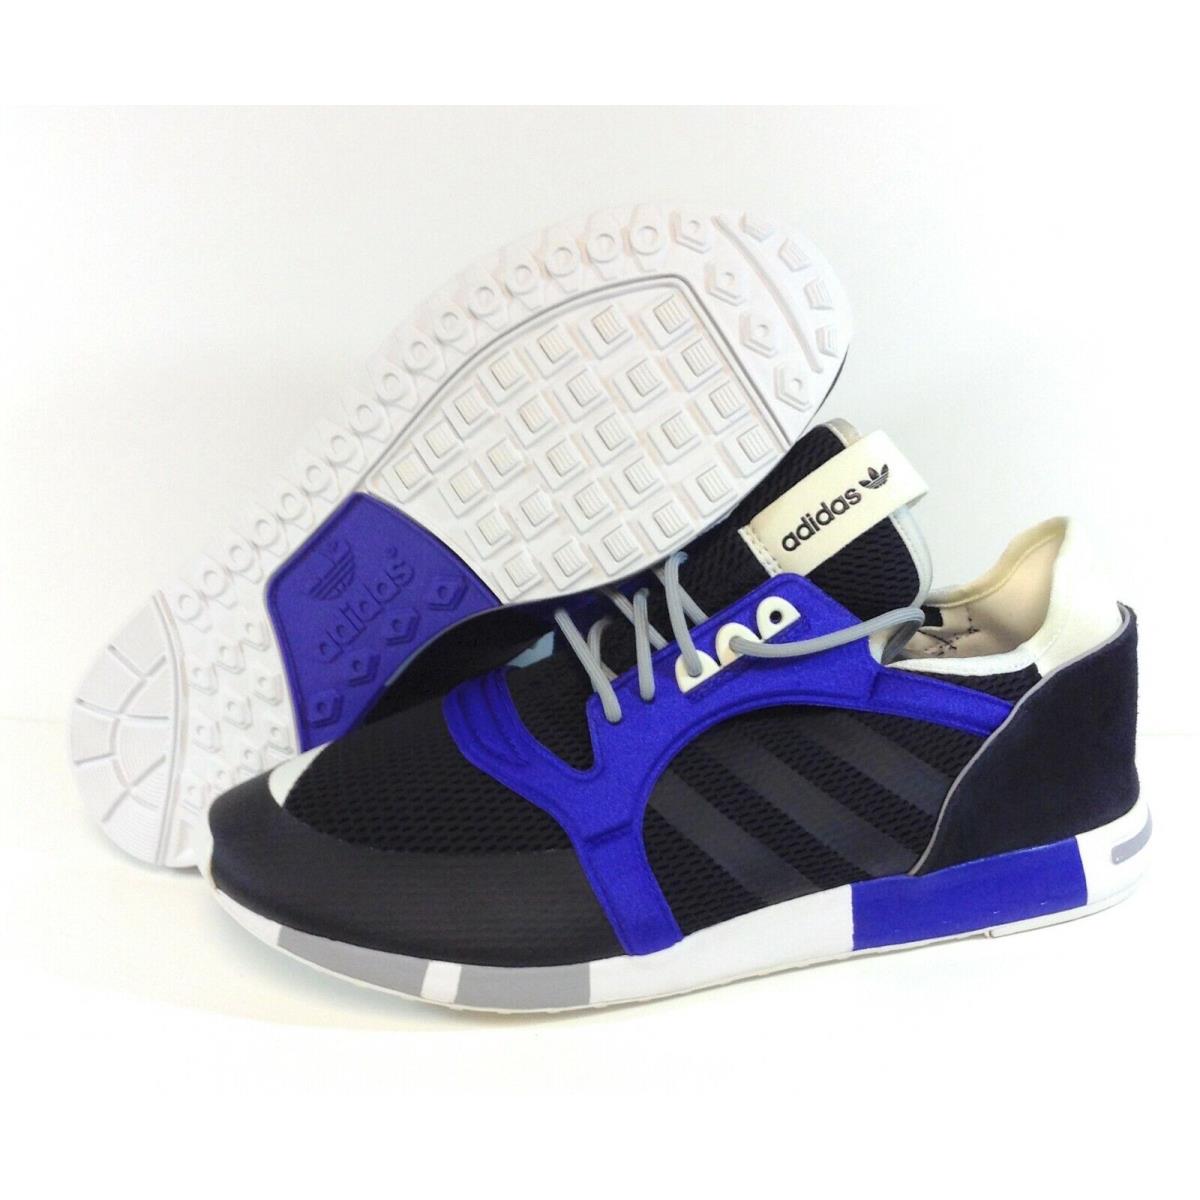 Mens Adidas Boston Super CC B25842 Black Purple 2015 Deadstock Sneakers Shoes - Black, Manufacturer: Black